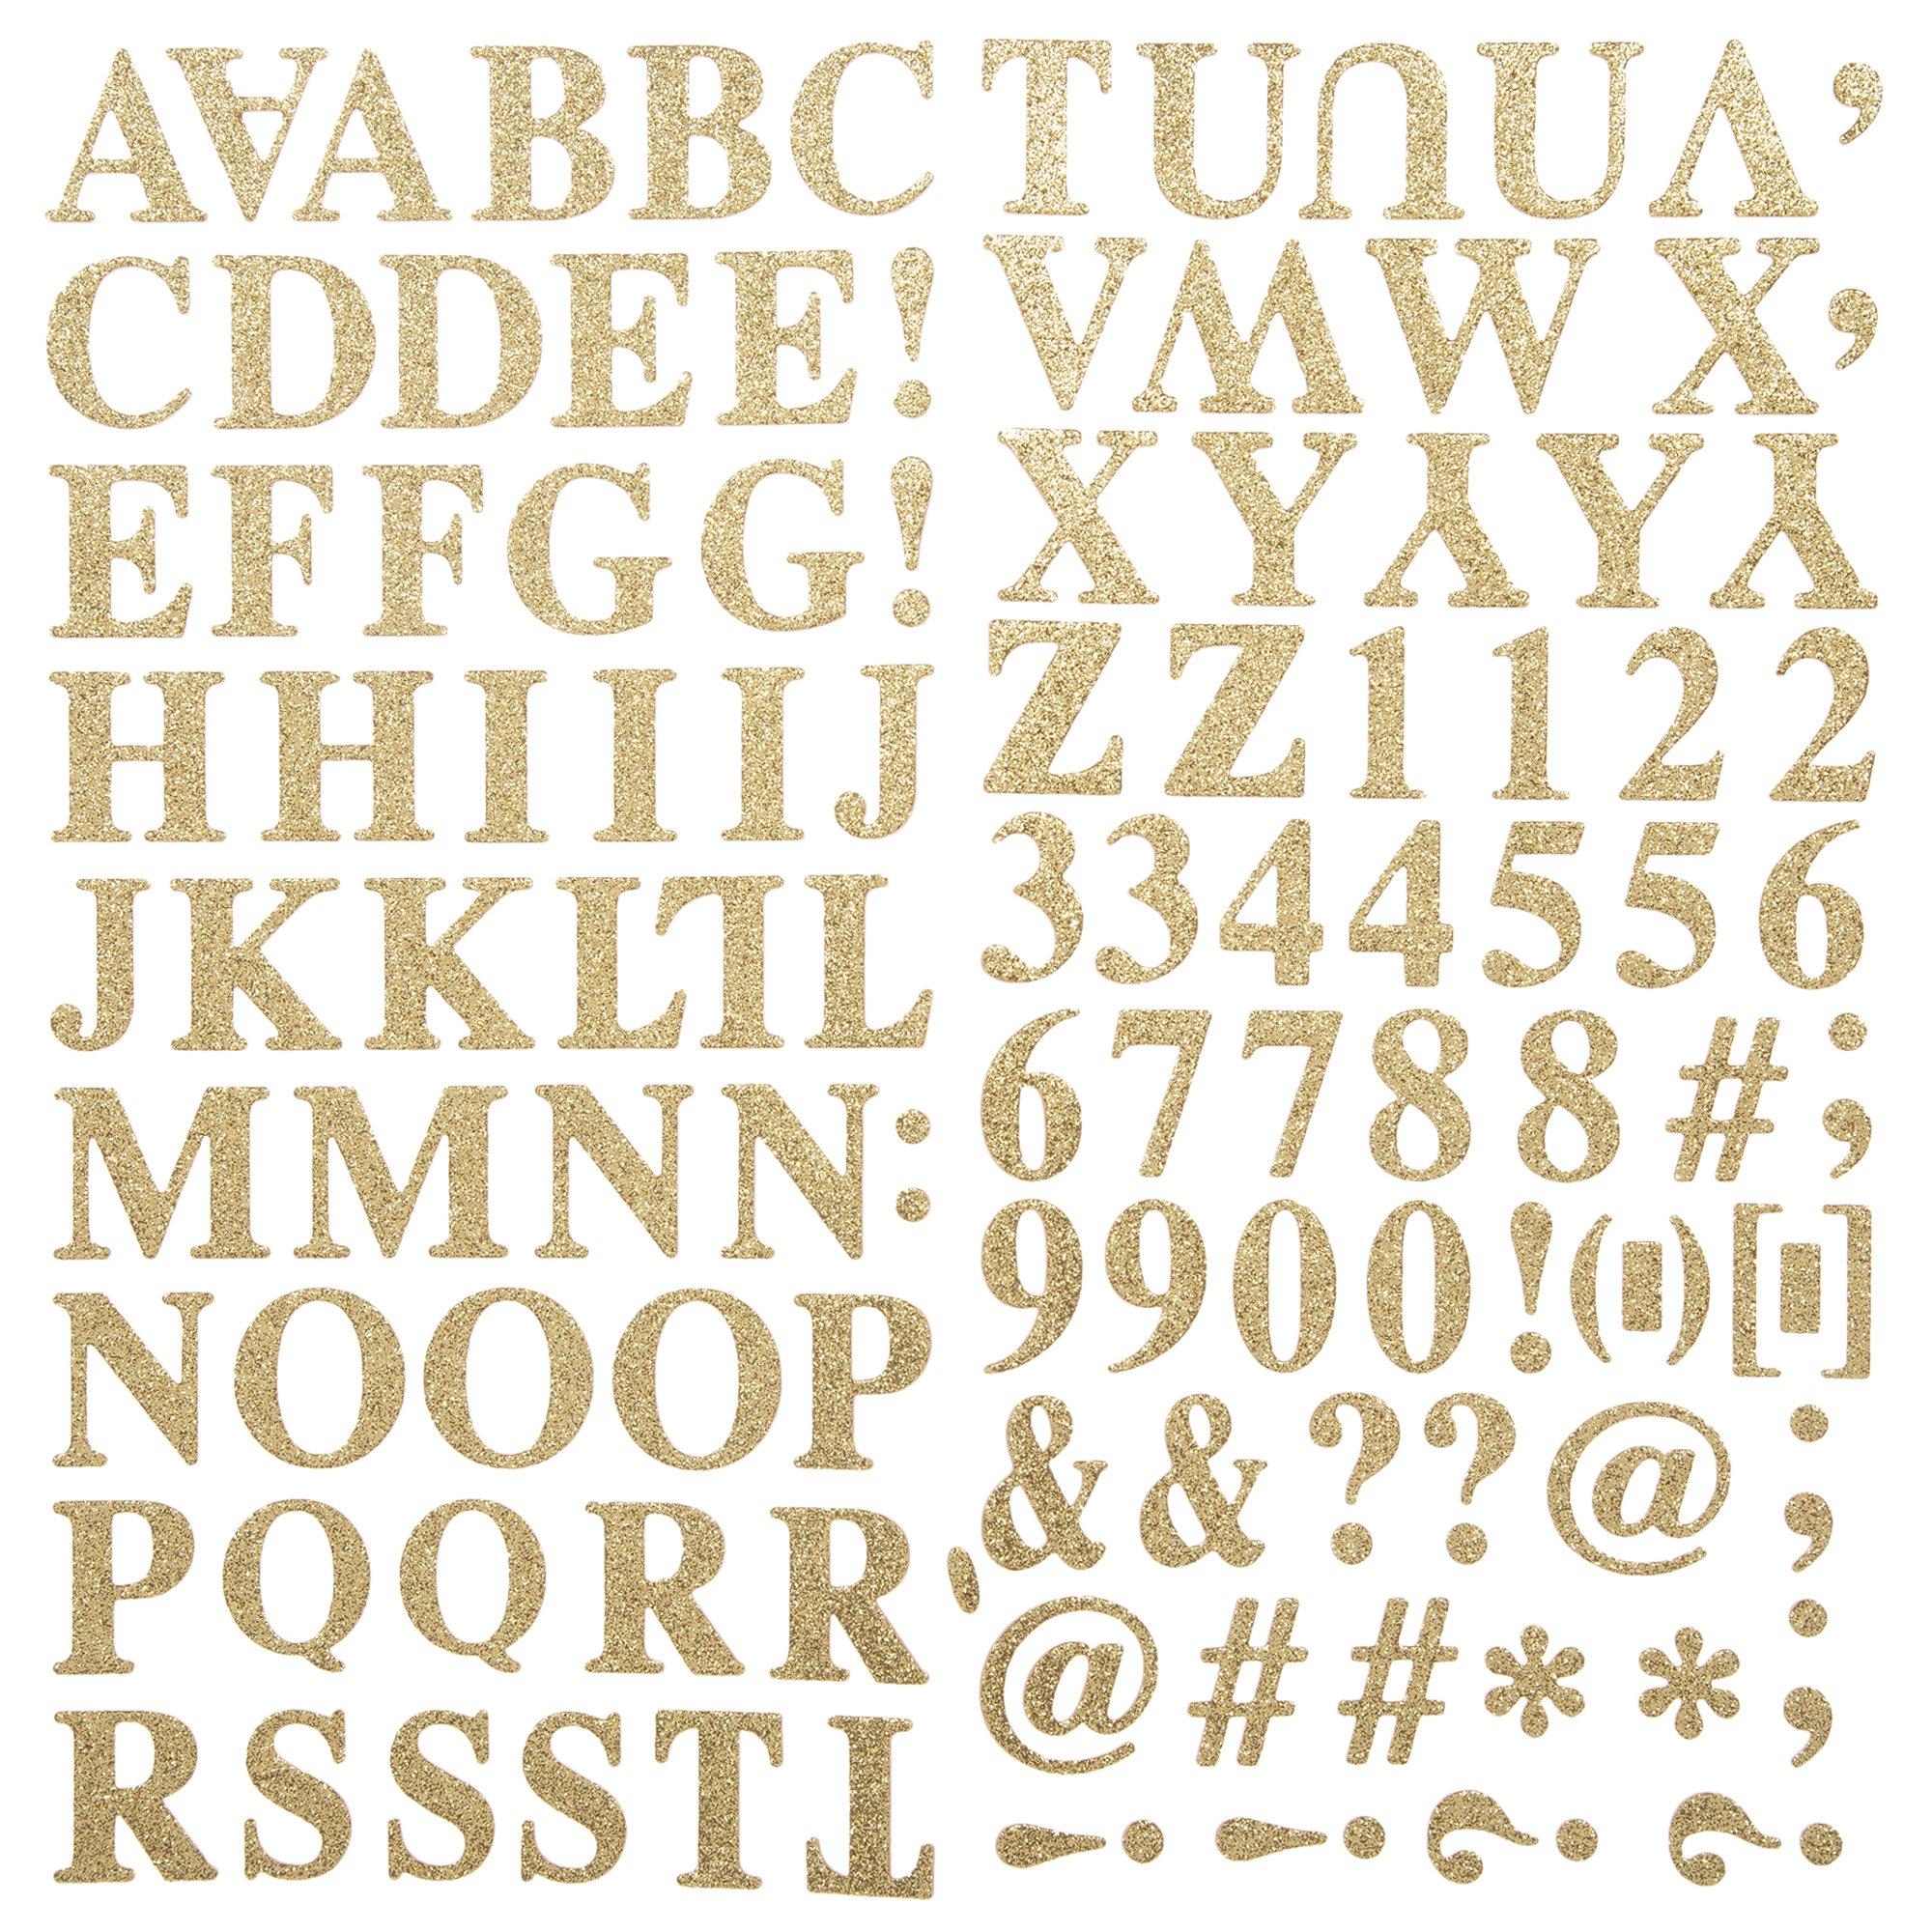  BABORUI 10 Sheets Letters Stickers, Glitter Alphabet